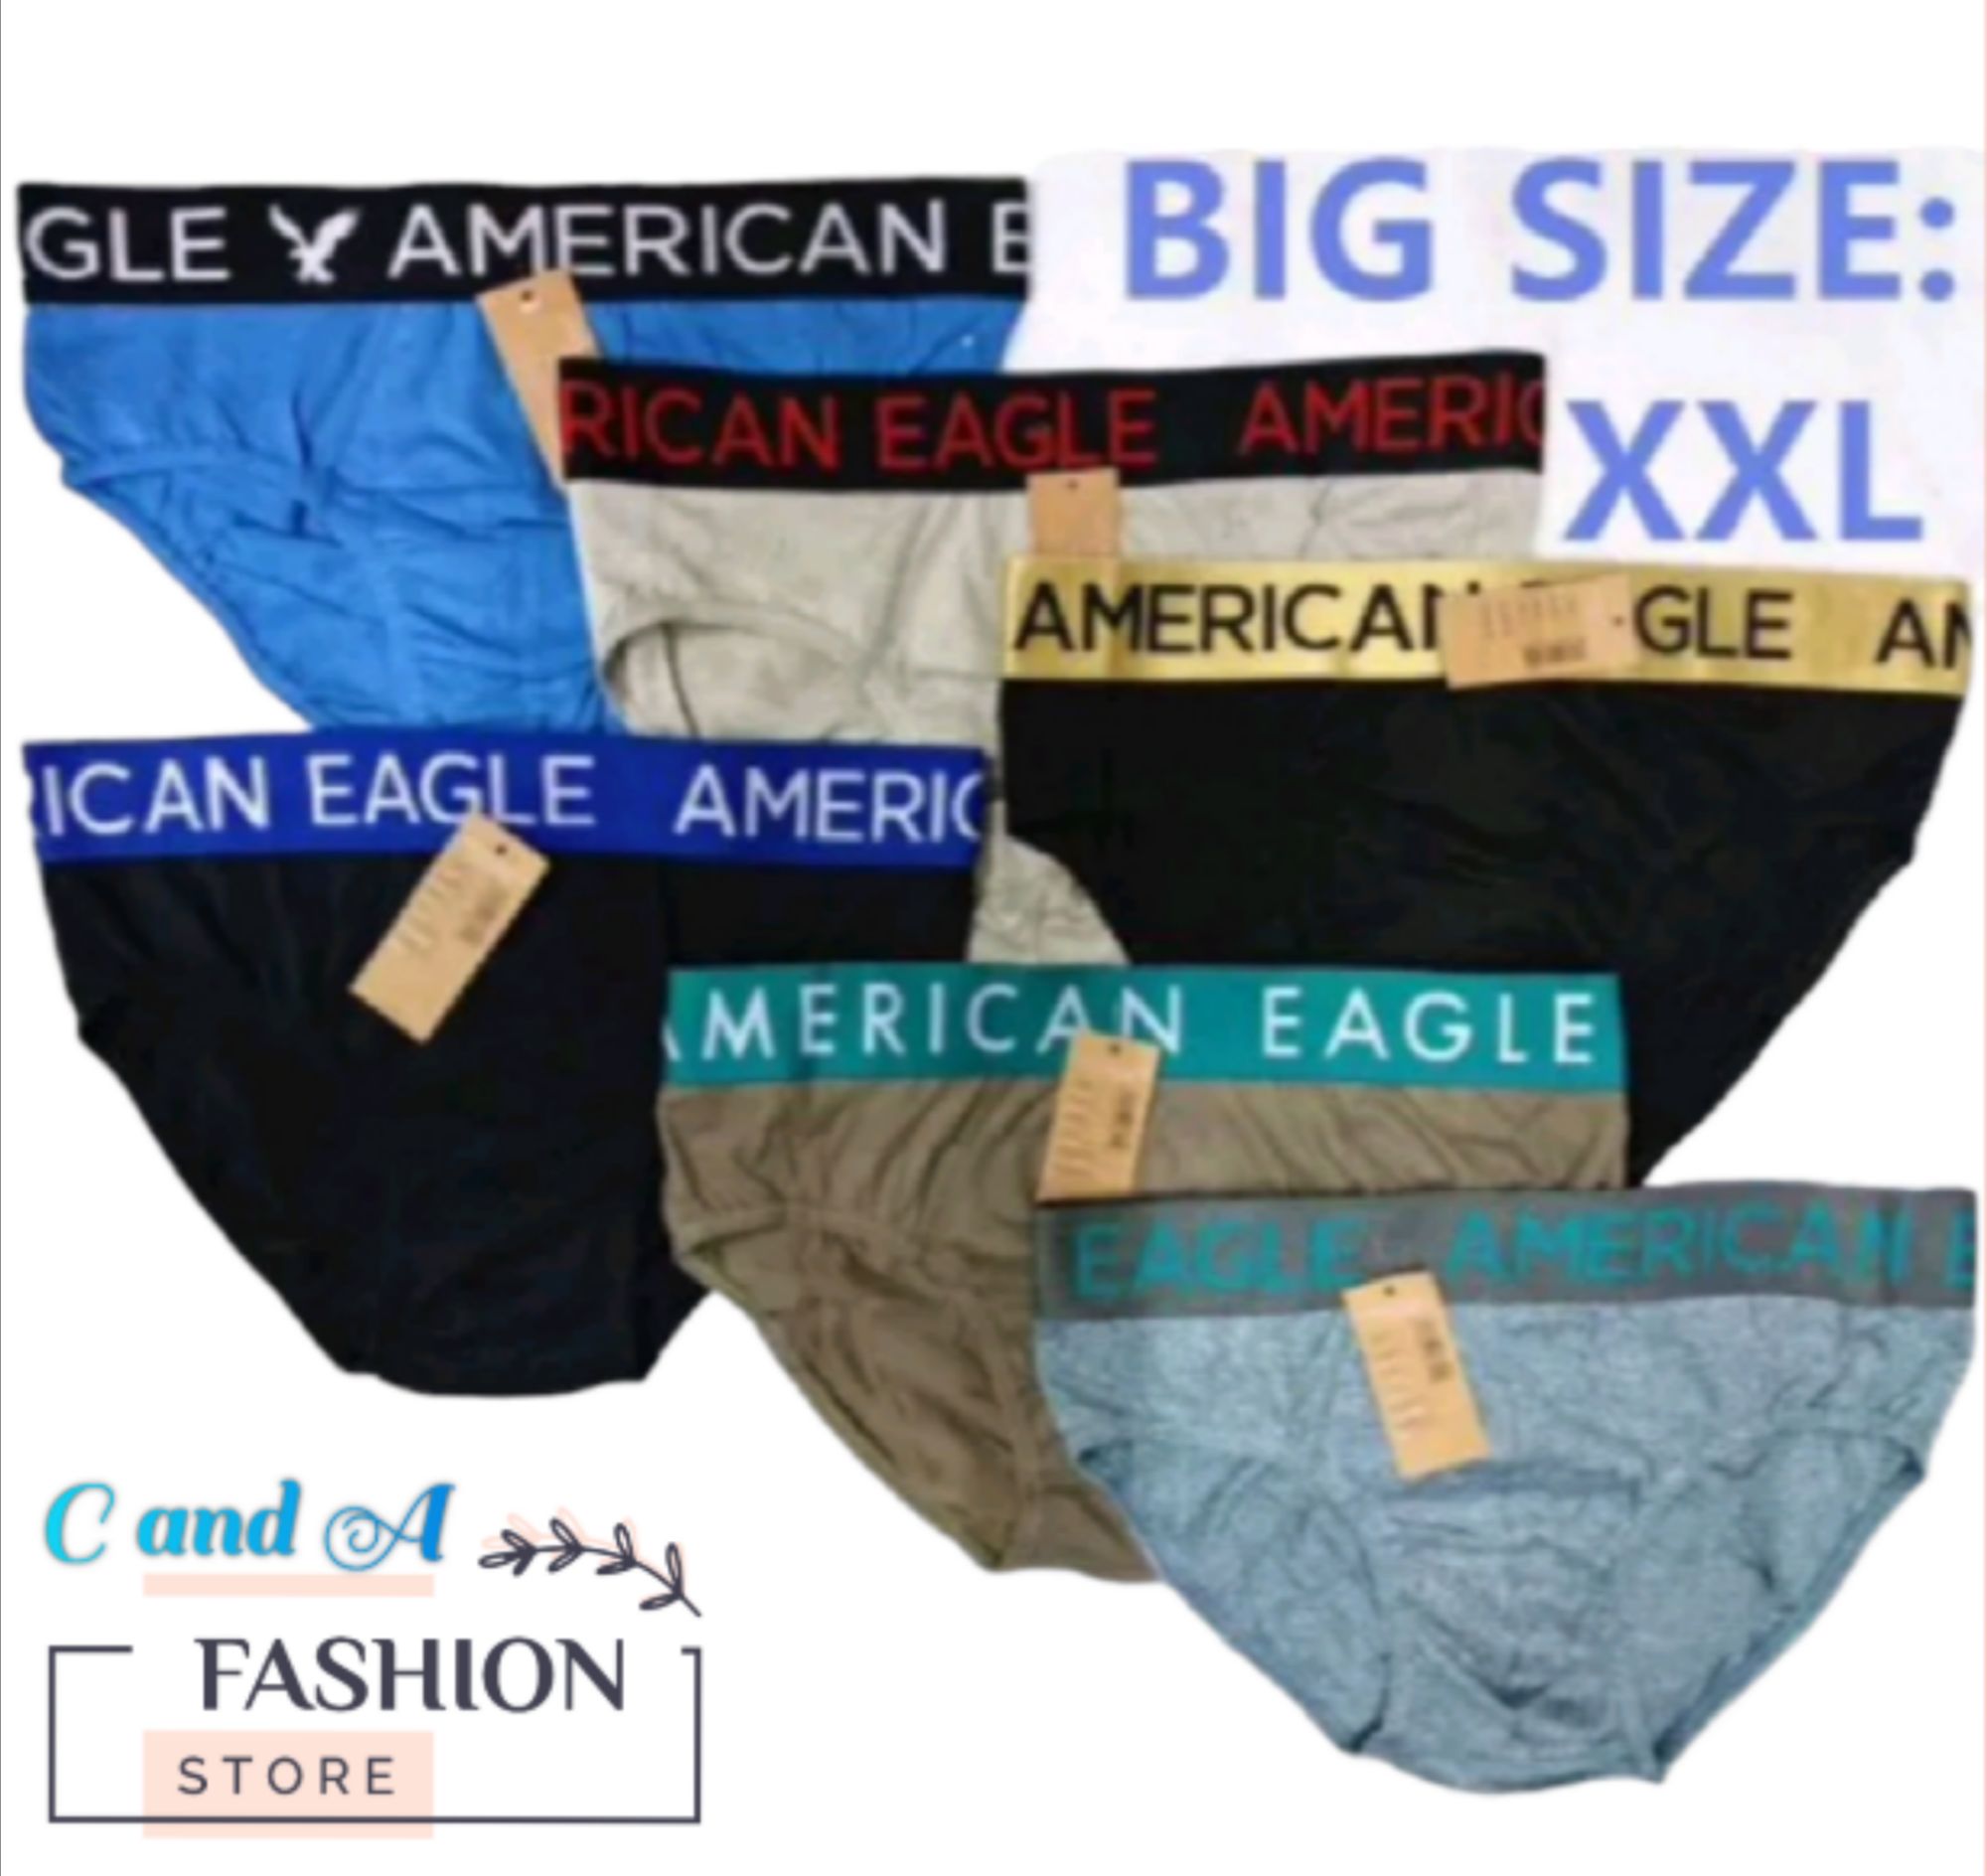 XXL big size mens brief American Eagle